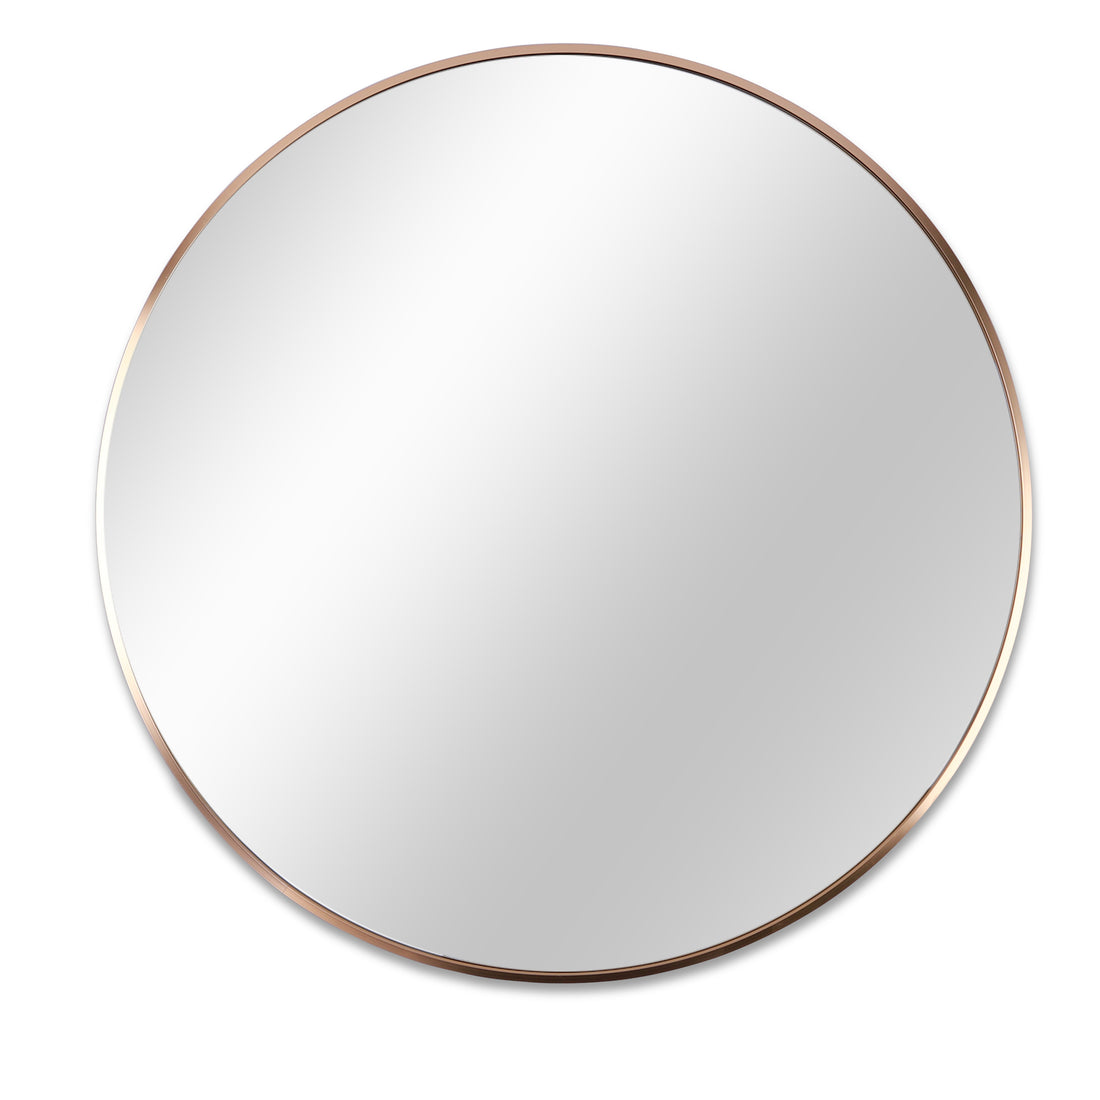 Gold 32 Inch Metal Round Bathroom Mirror gold-classic-mdf+glass-aluminium alloy